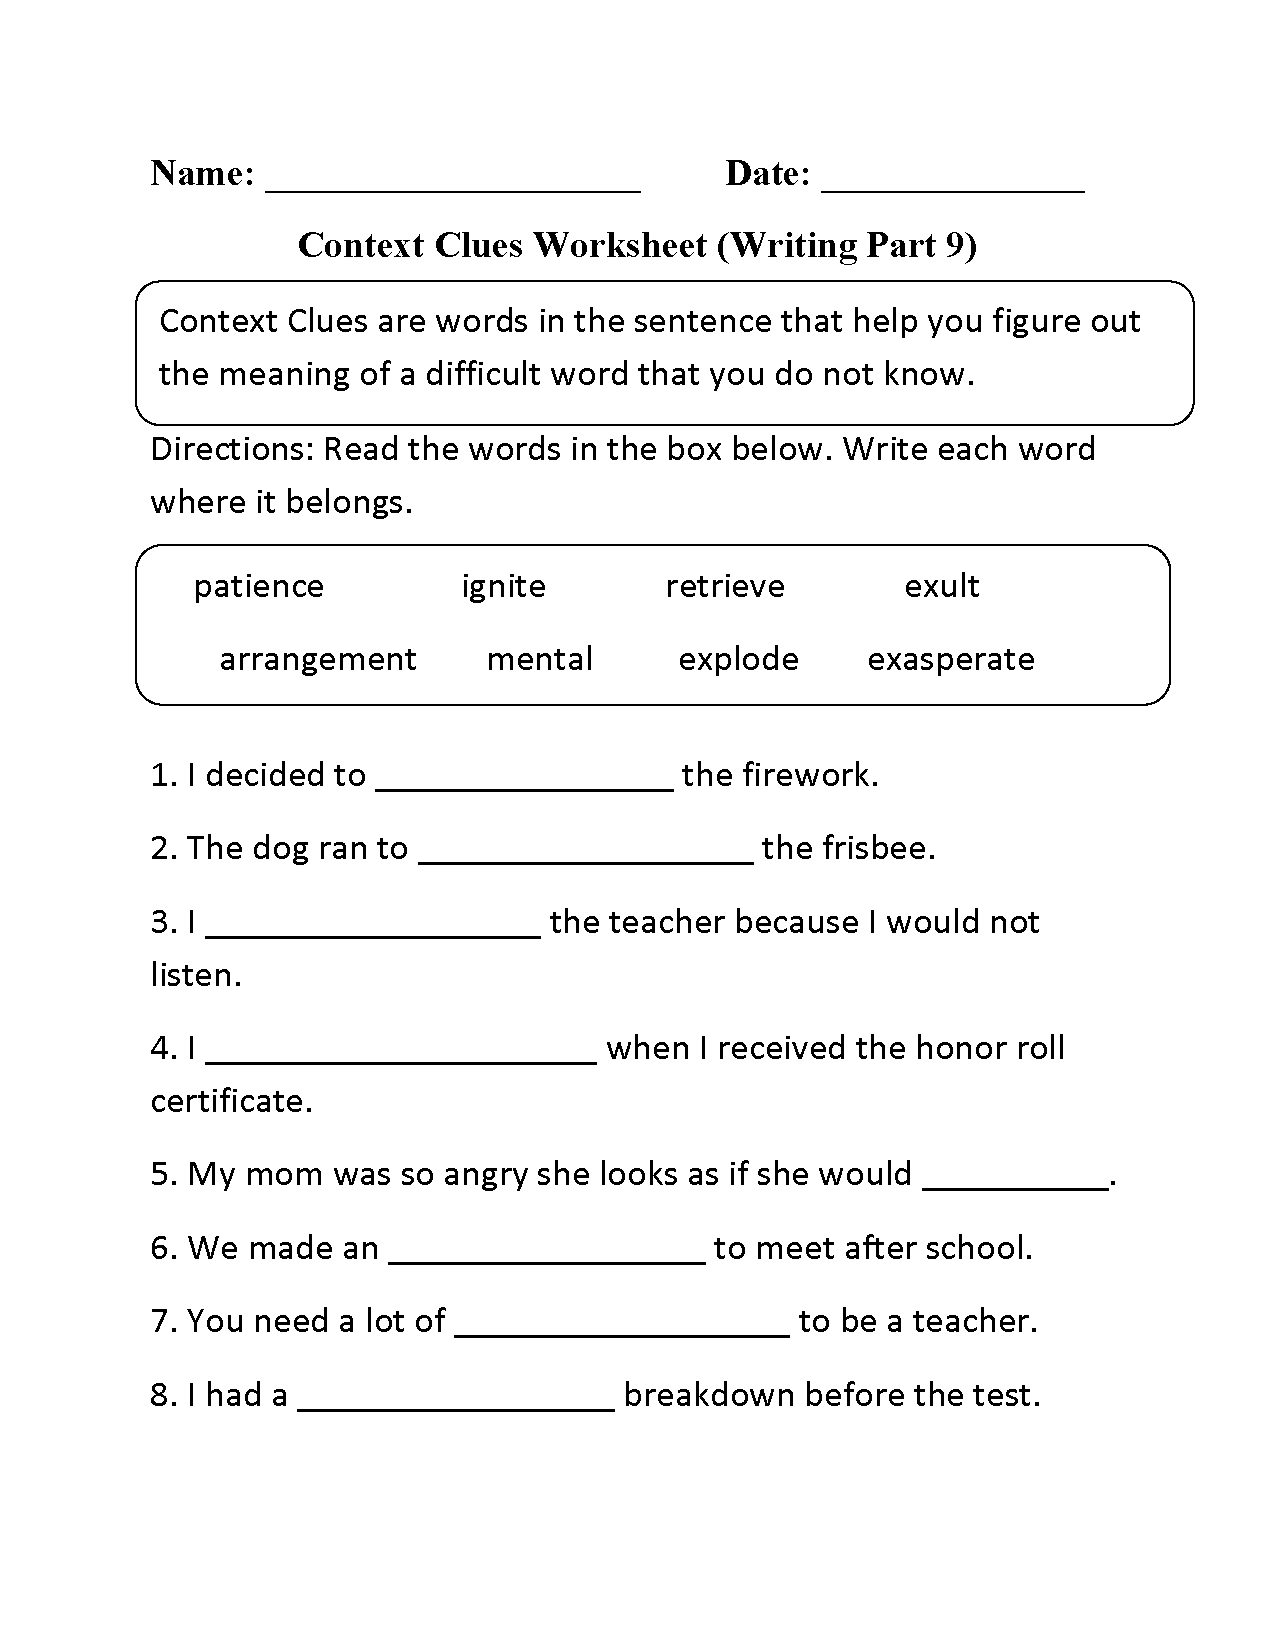 Context Clues Worksheet Writing Part 9 Intermediate | Context Clues | Context Clues Printable Worksheets 6Th Grade